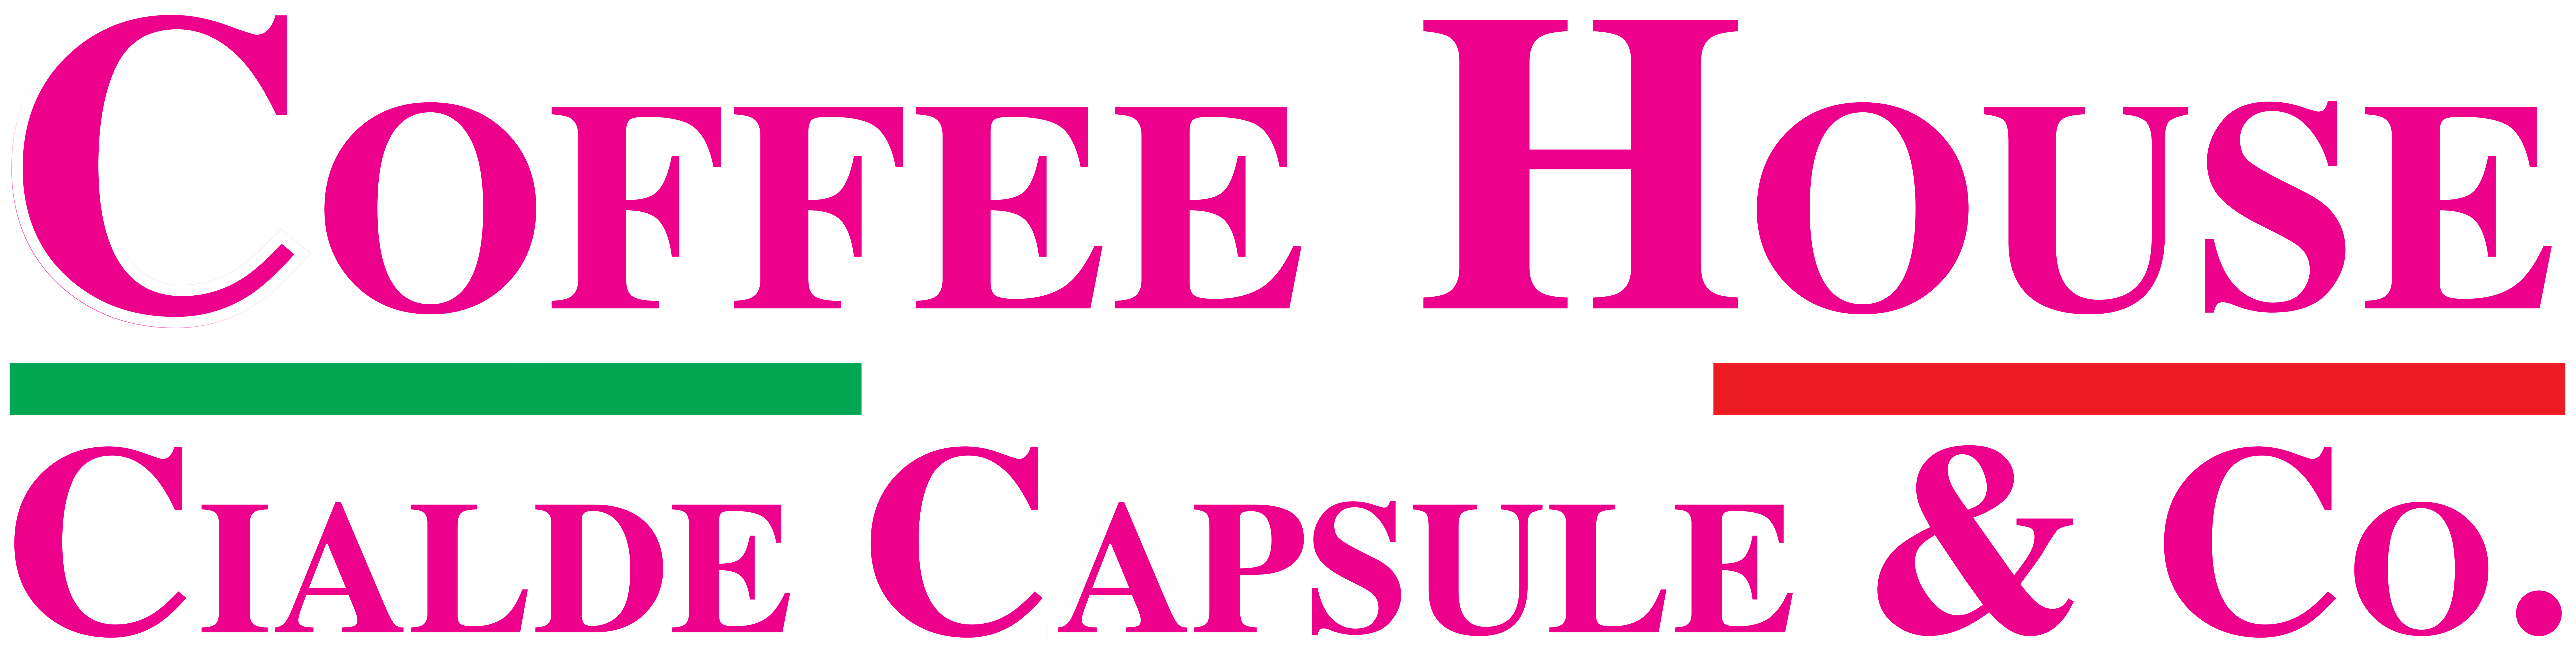 Coffe_house_logo